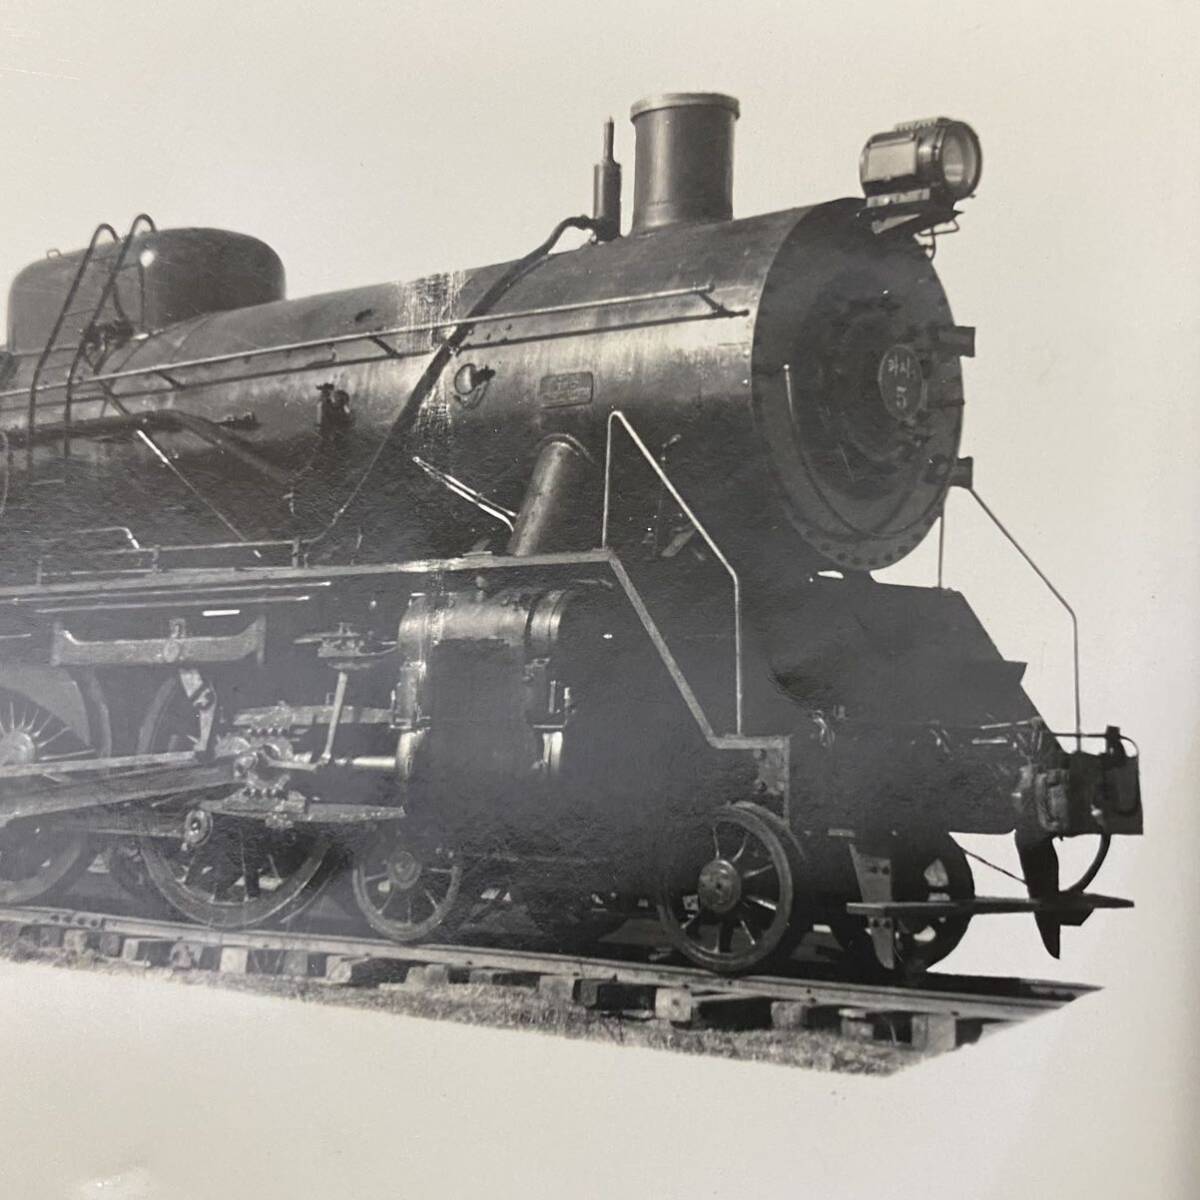 満鉄 南満洲鉄道 「パシコ」PASHIKO SL5勝利 古写真 白黒写真 パシコ型蒸気機関車 16.7×12cm 鉄道写真 _画像2